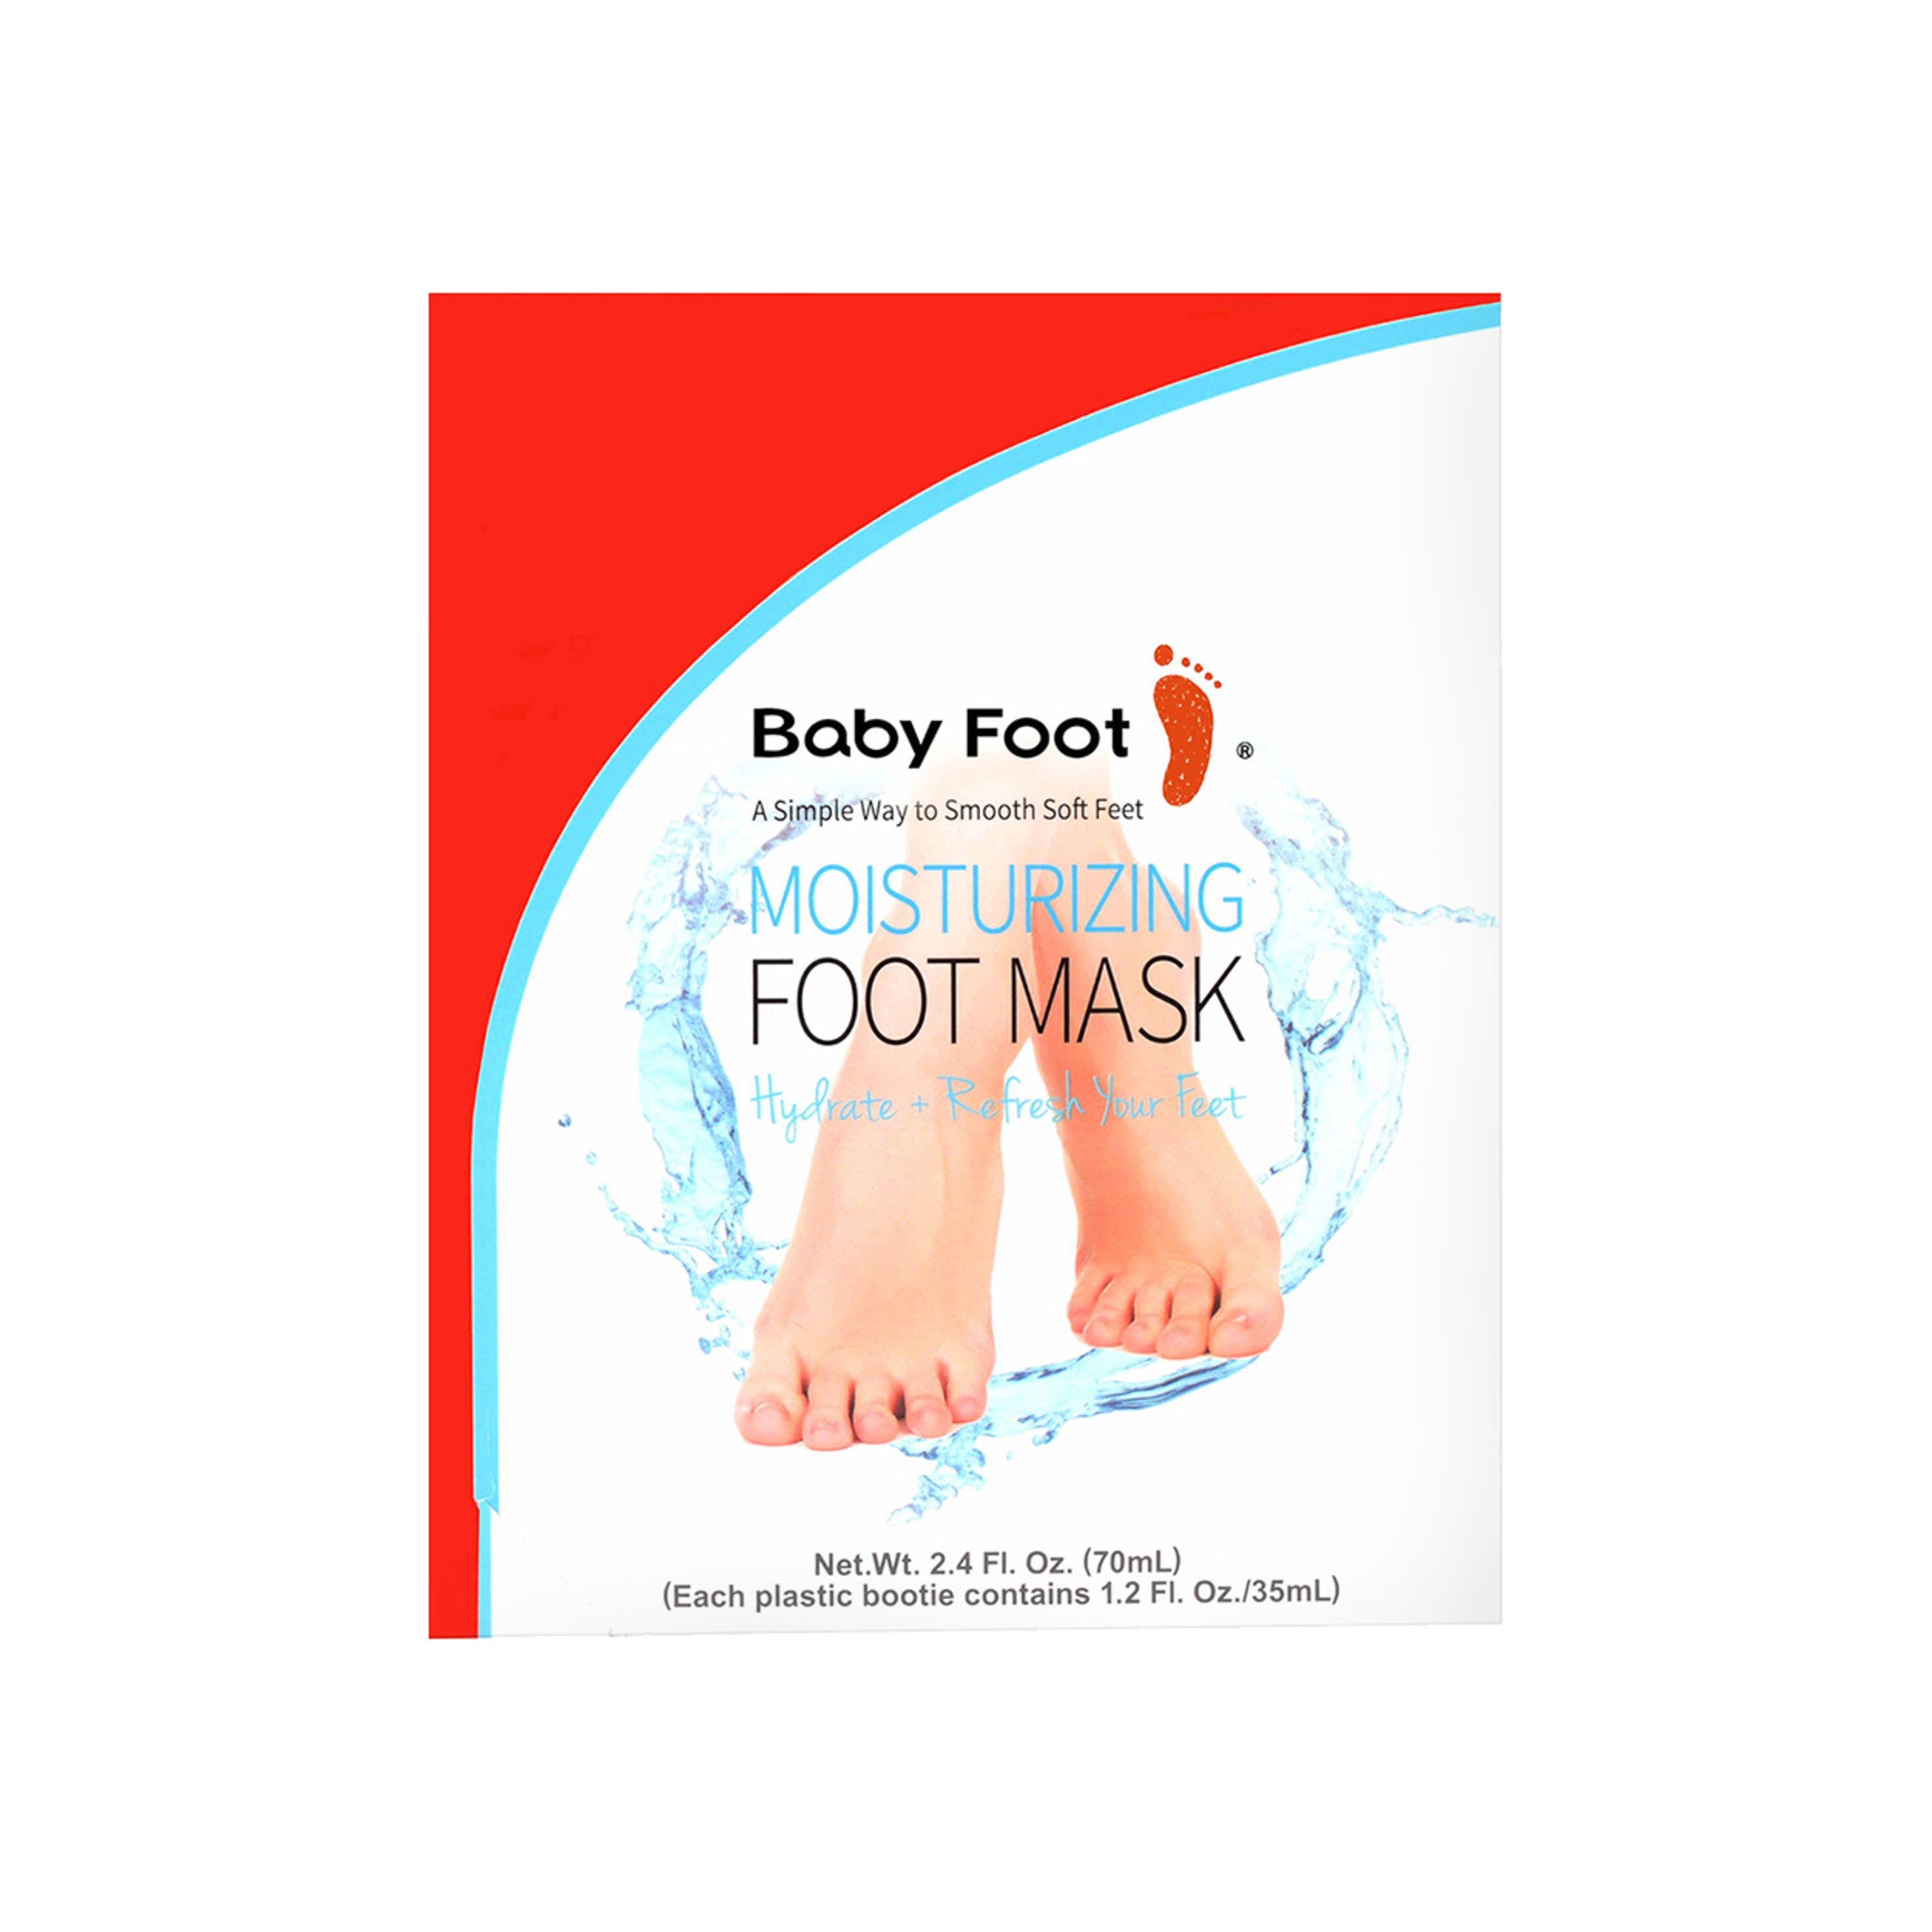 Baby Foot Baby Foot Moisturizing Foot Mask main image.